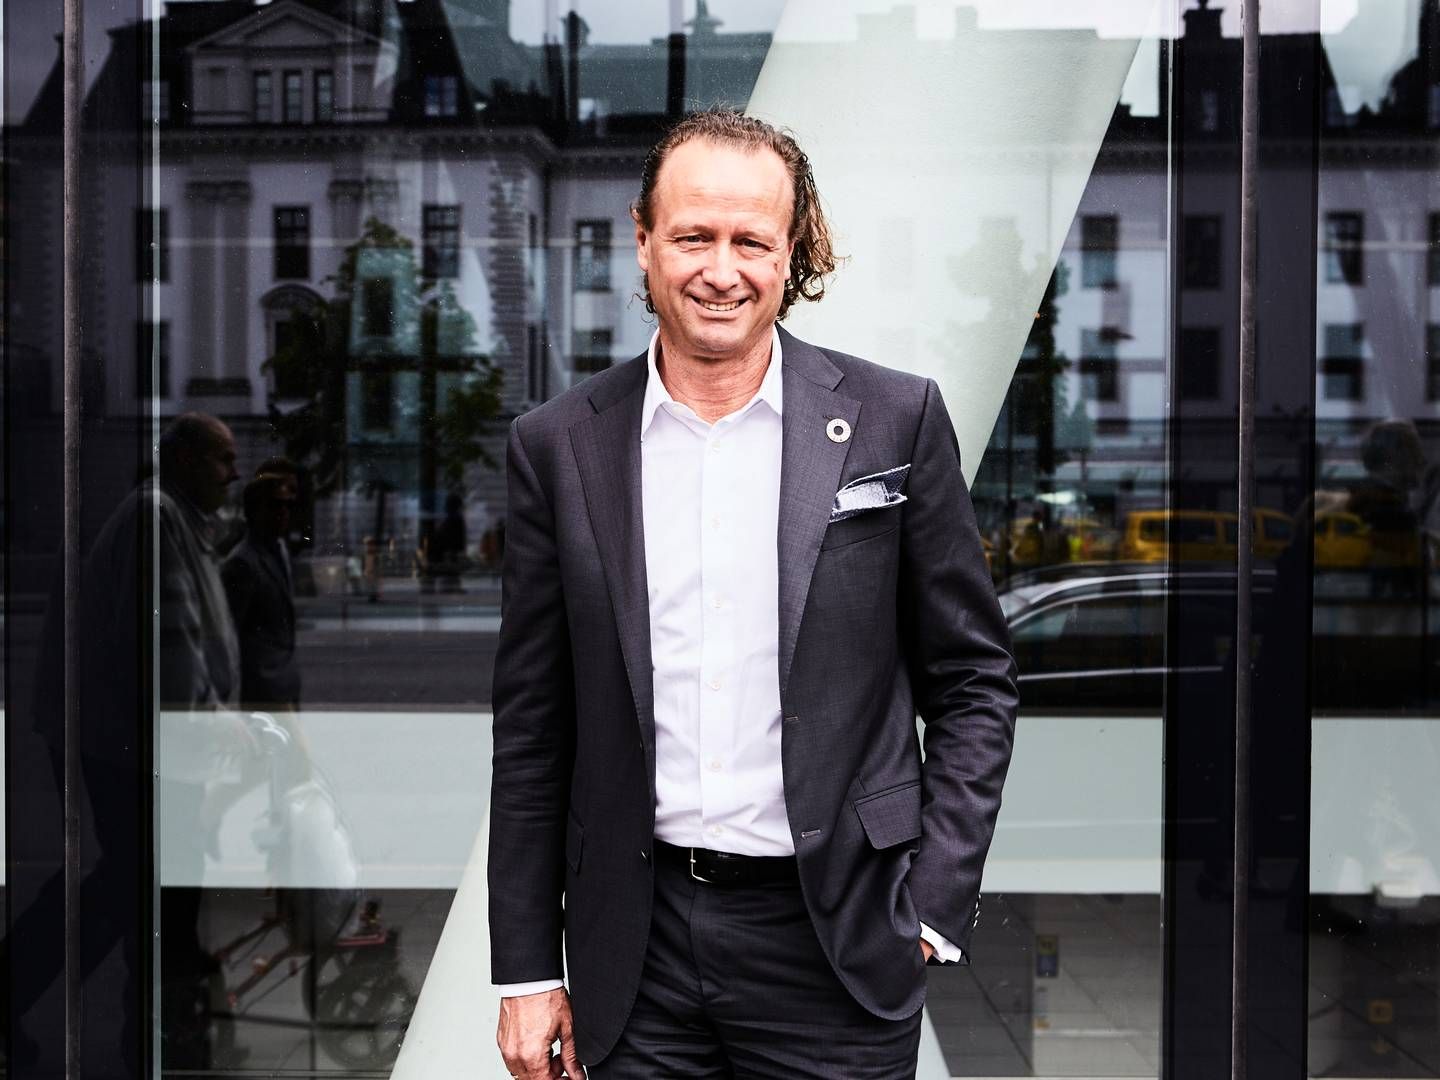 Adm. dir. Jan Erik Saugestad i Storebrand Asset Management vil ha en nordisk investorallianse som sikrer grønn omstilling basert på nordiske verdier. | Foto: Pr/ Storebrand